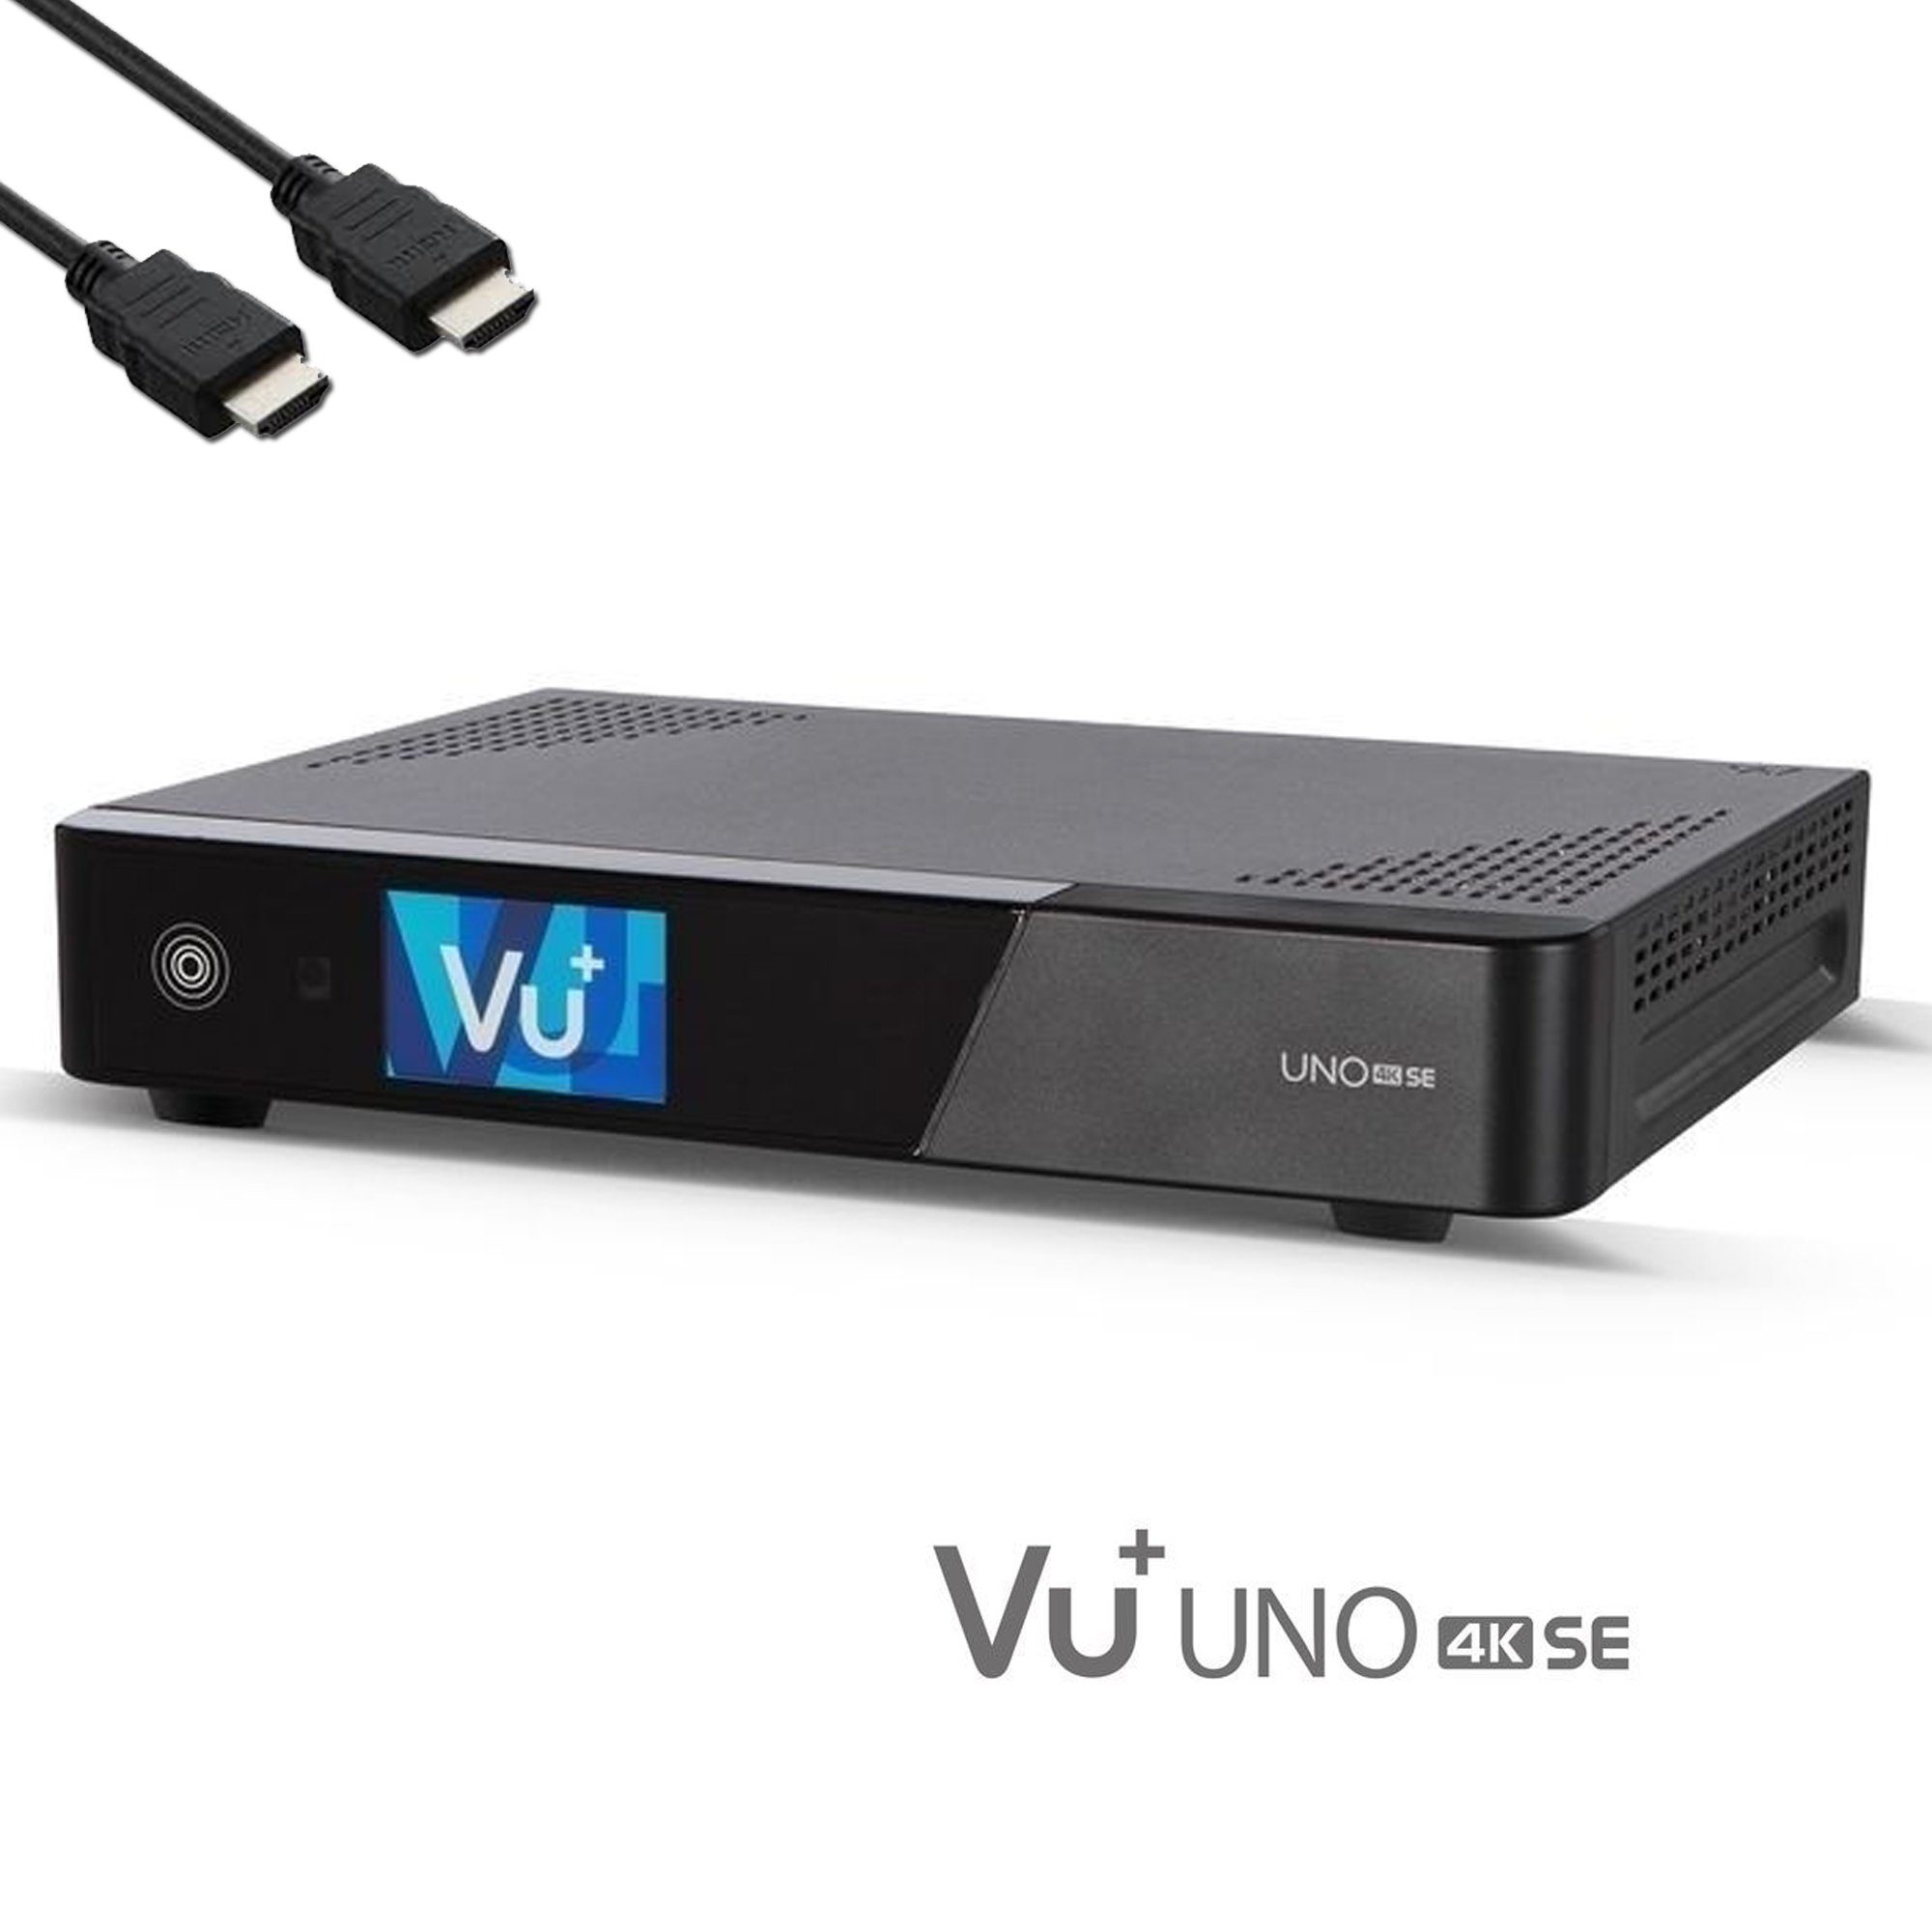 Sat FBC SE 4K VU+ E2 - 1x Tuner SAT-Receiver UNO Twin HDR UHD Receiver Linux VU+ DVB-S2